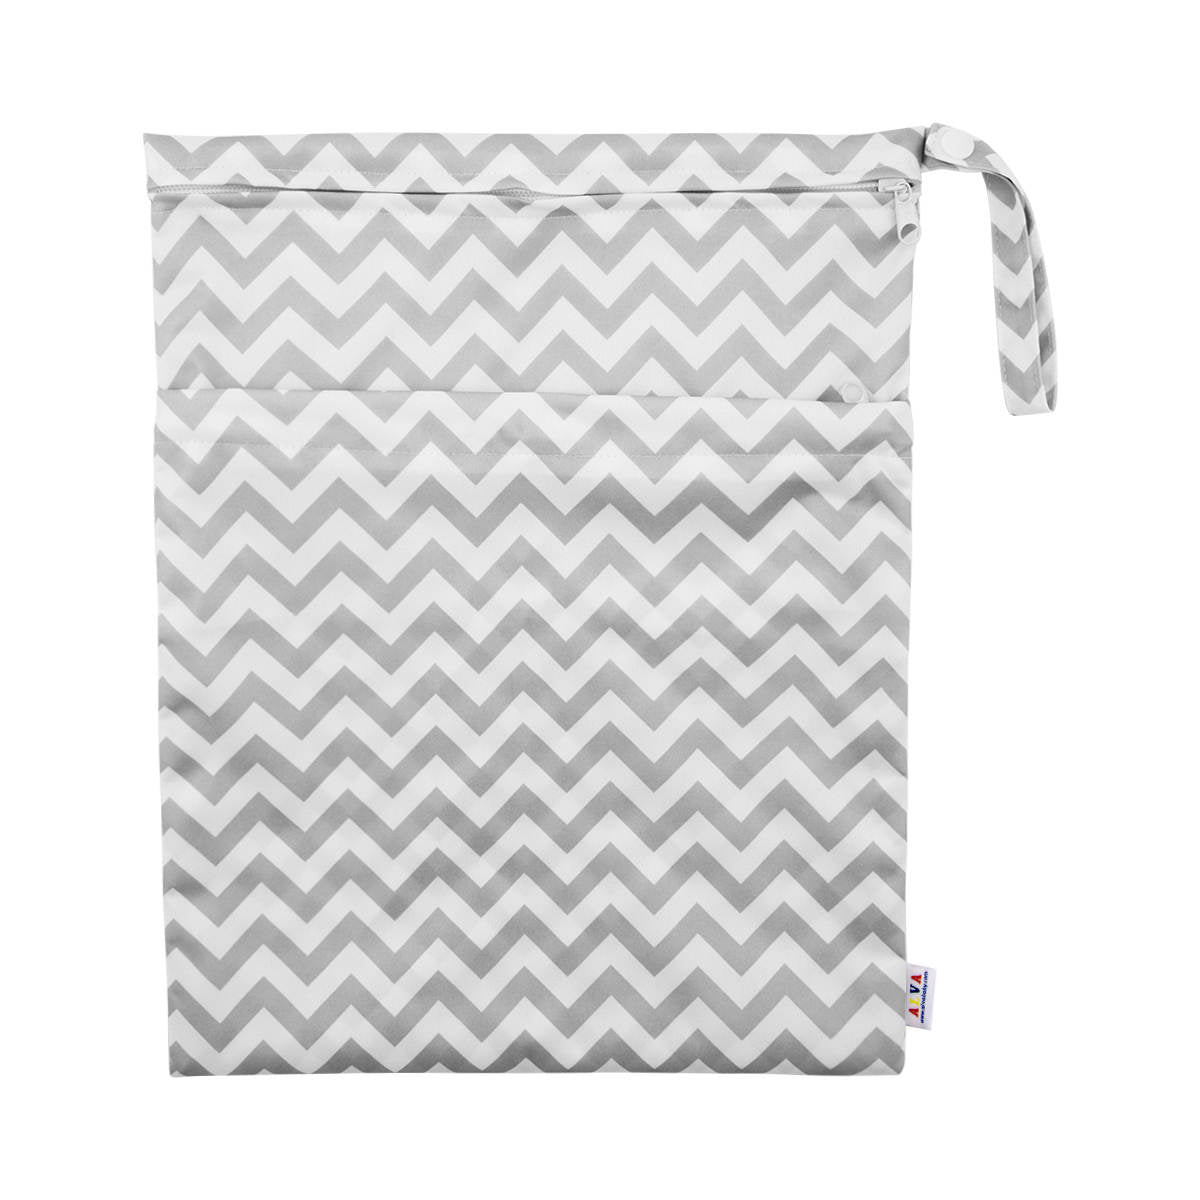 Chevron print cloth nappy waterproof storage bag - Front 1